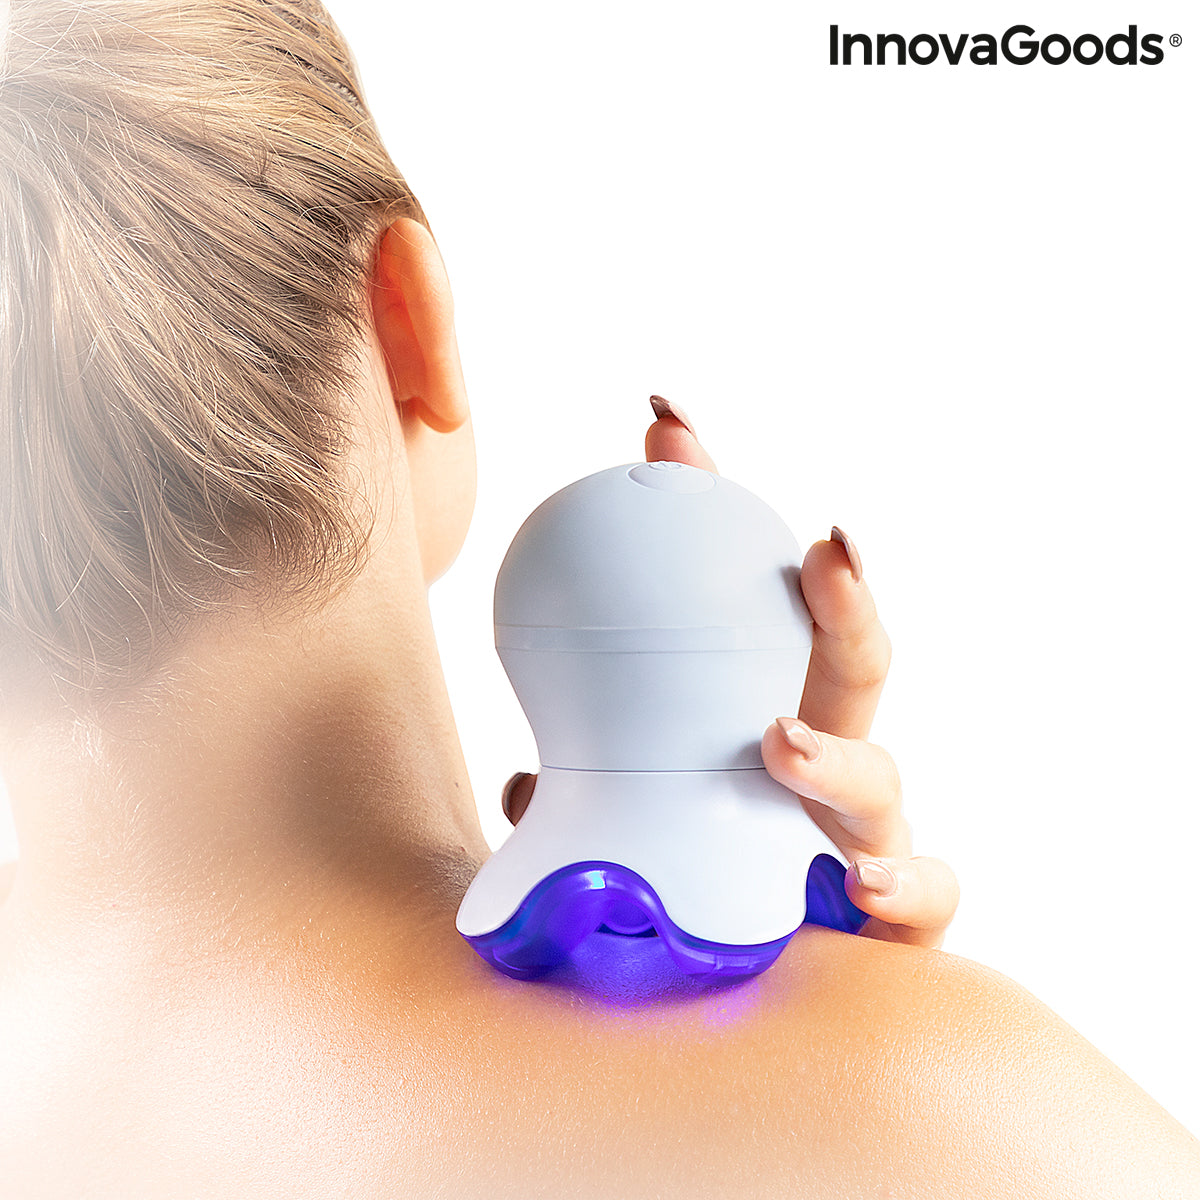 Mini Vibrating Body Massager Mimass InnovaGoods